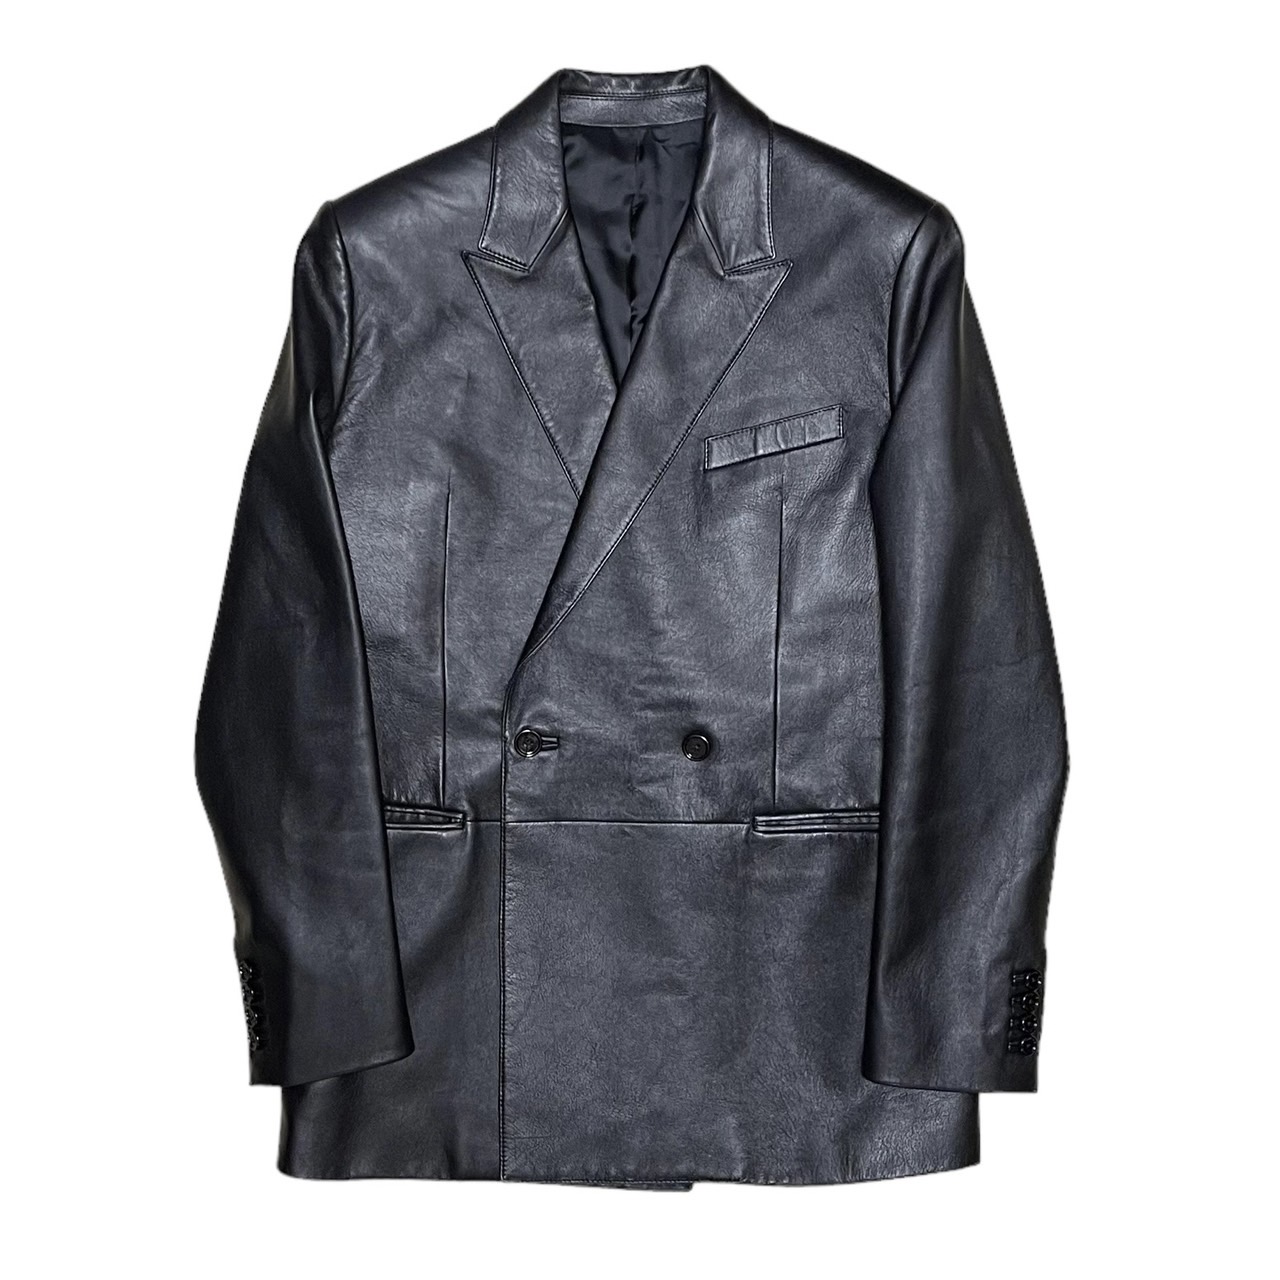 CELINE 19AW Leather Jacket 買取金額 122,980円